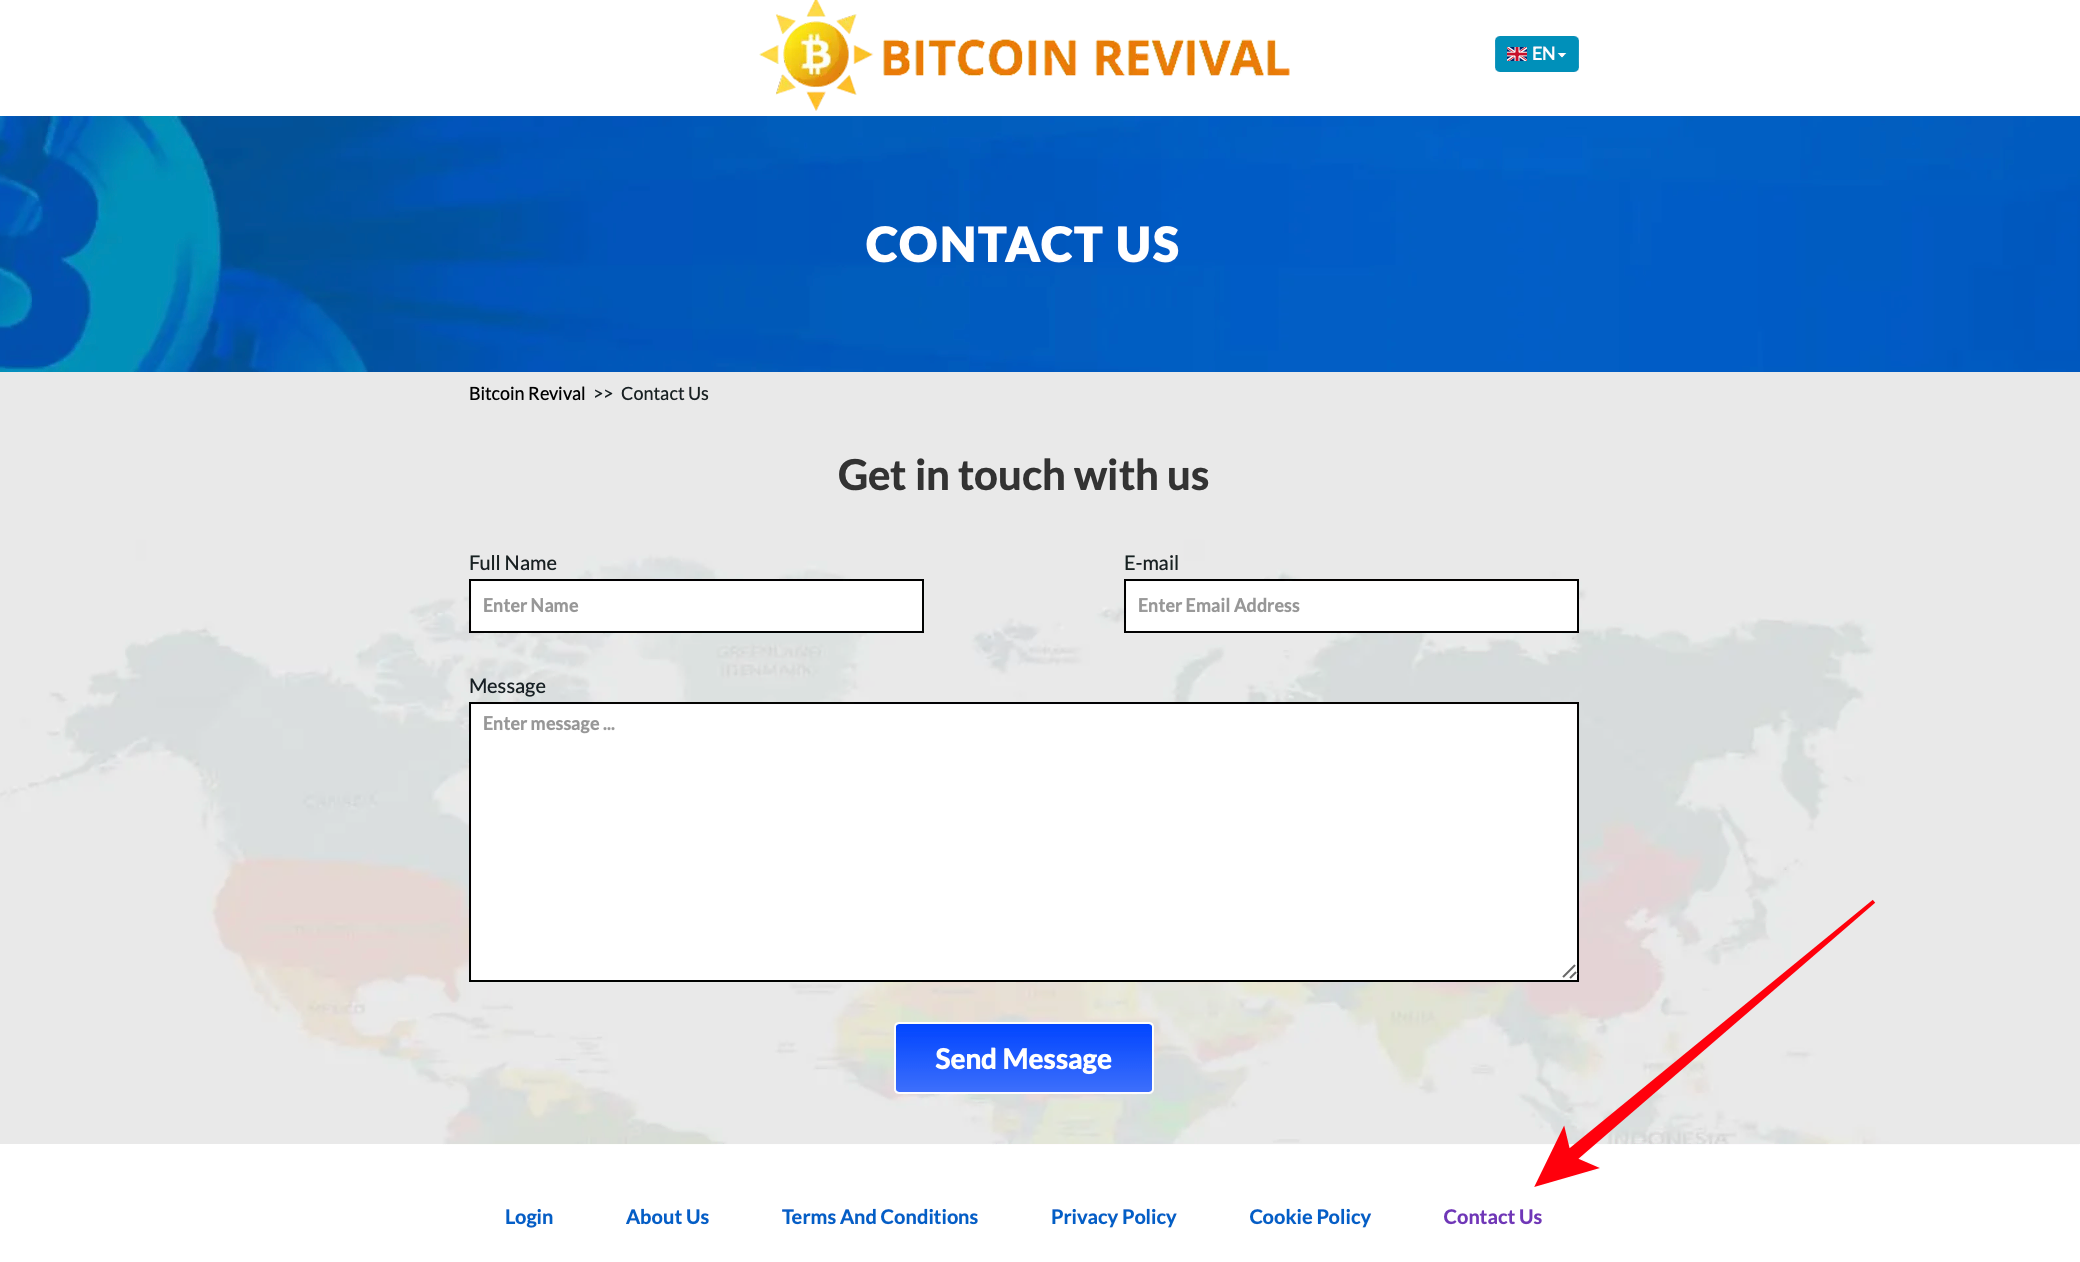 Layanan pelanggan Bitcoin Revival